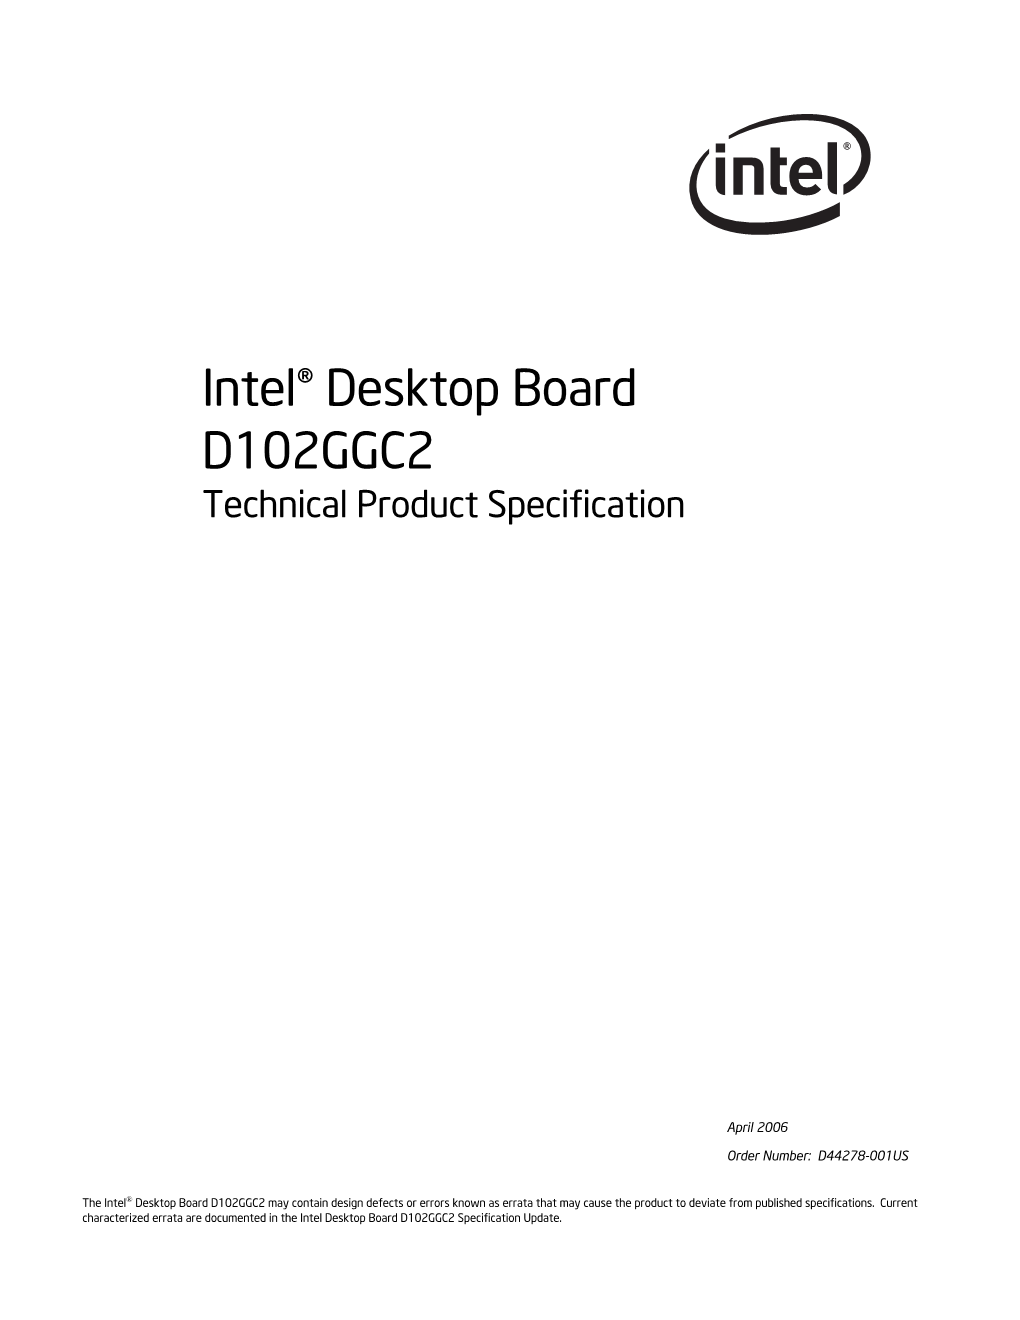 Intel® Desktop Board D102GGC2 Technical Product Specification